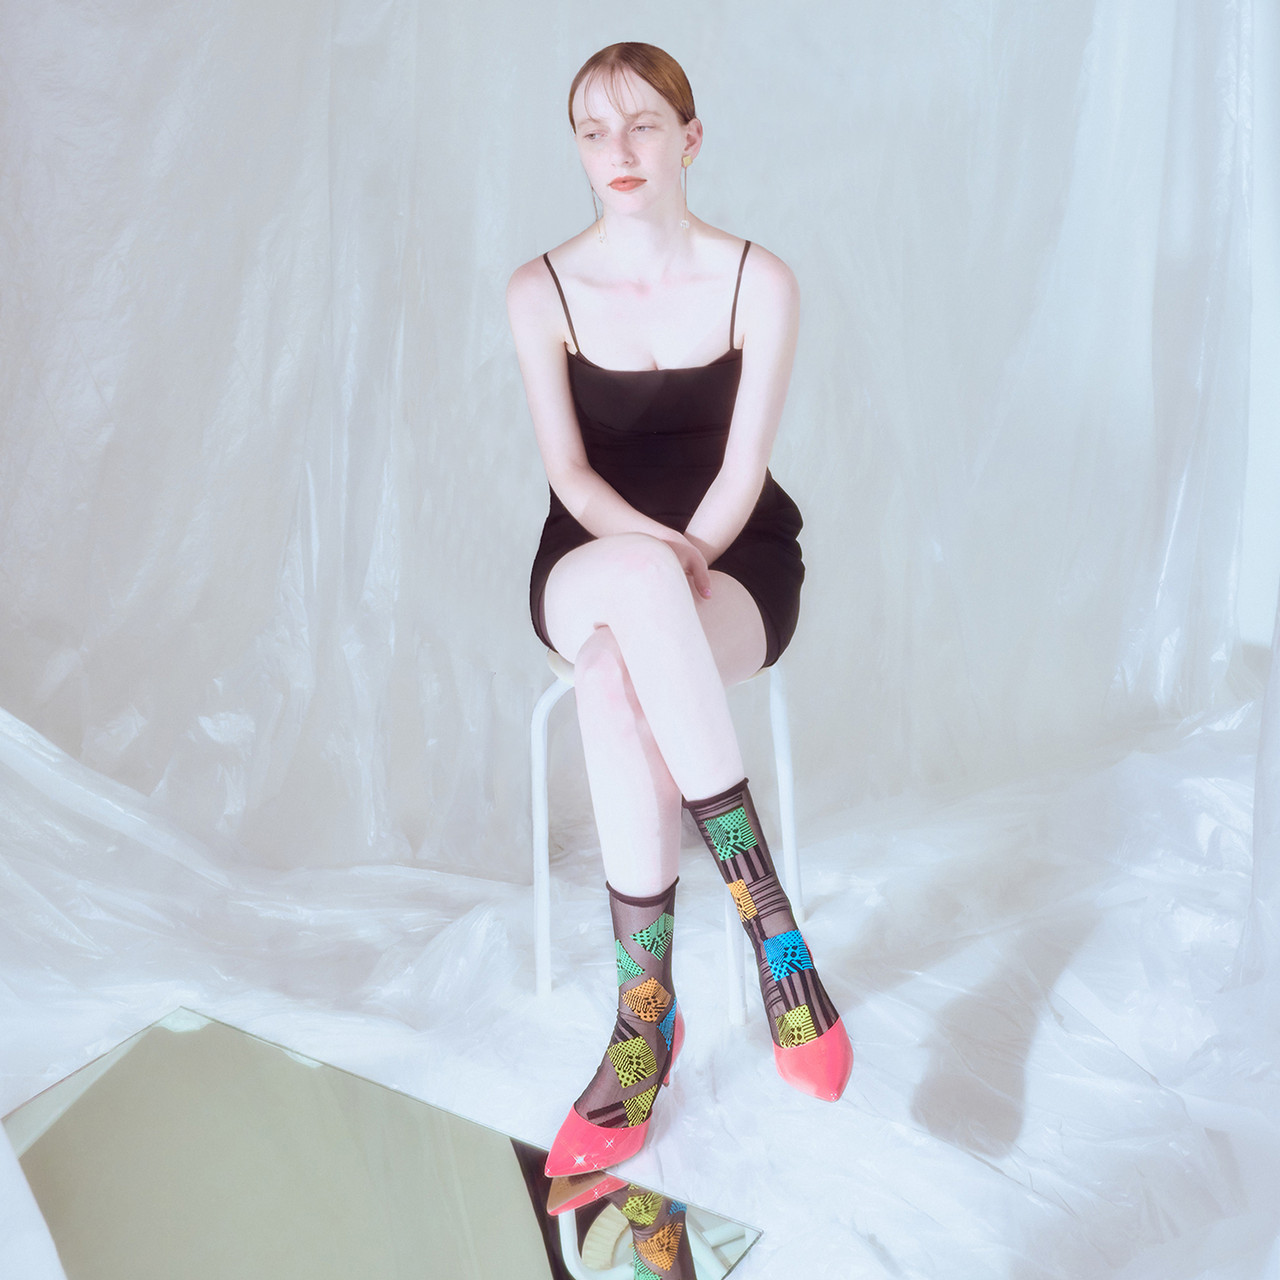 Black & Neon Cube Tulle Socks, 2nd Palette, tomfoolery